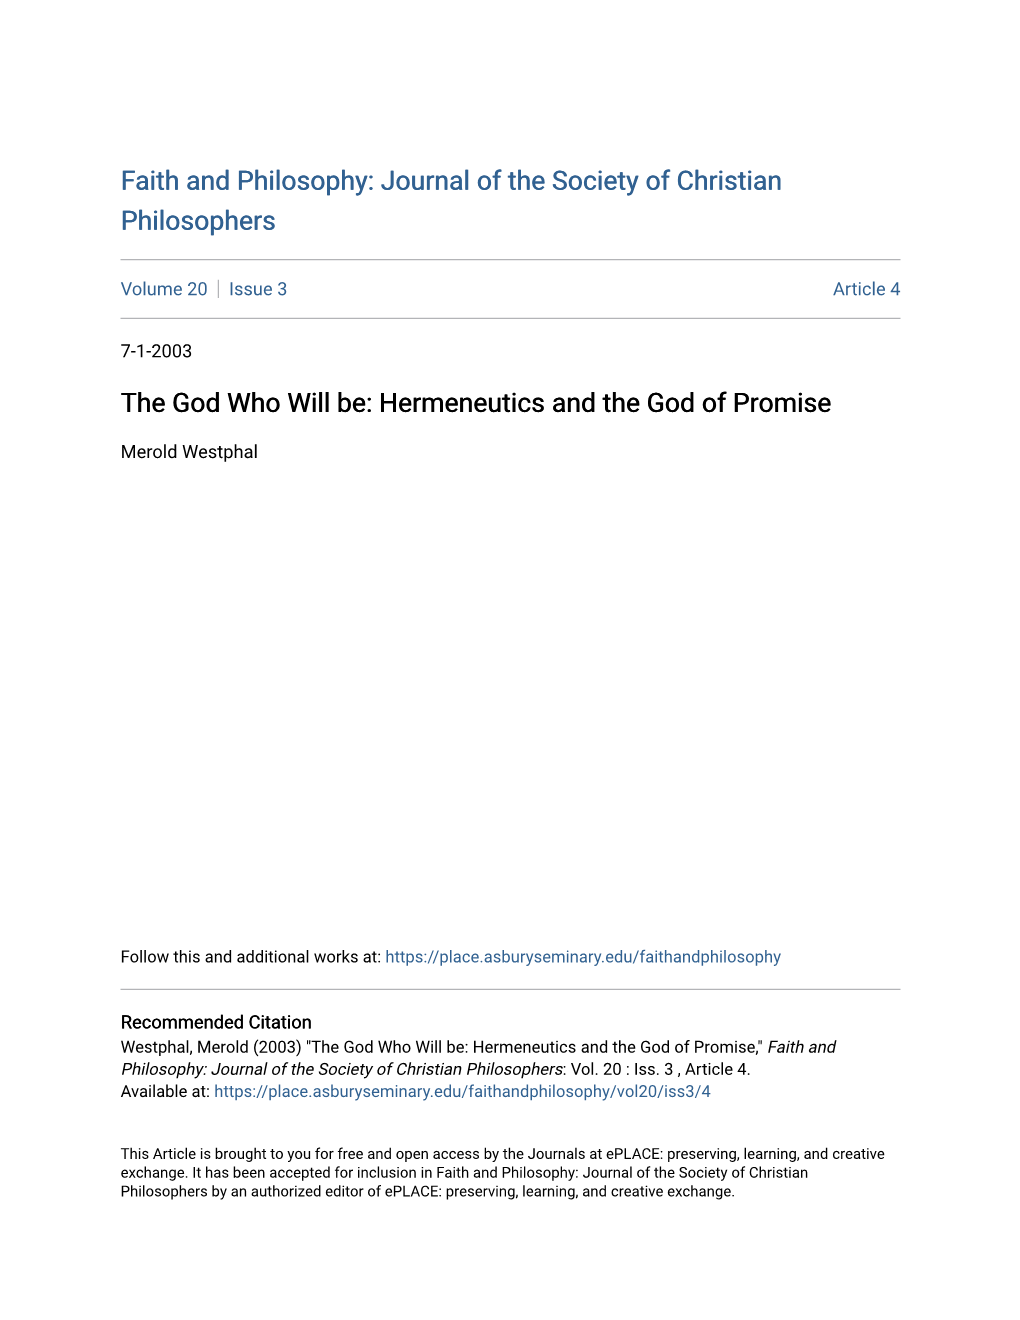 Hermeneutics and the God of Promise